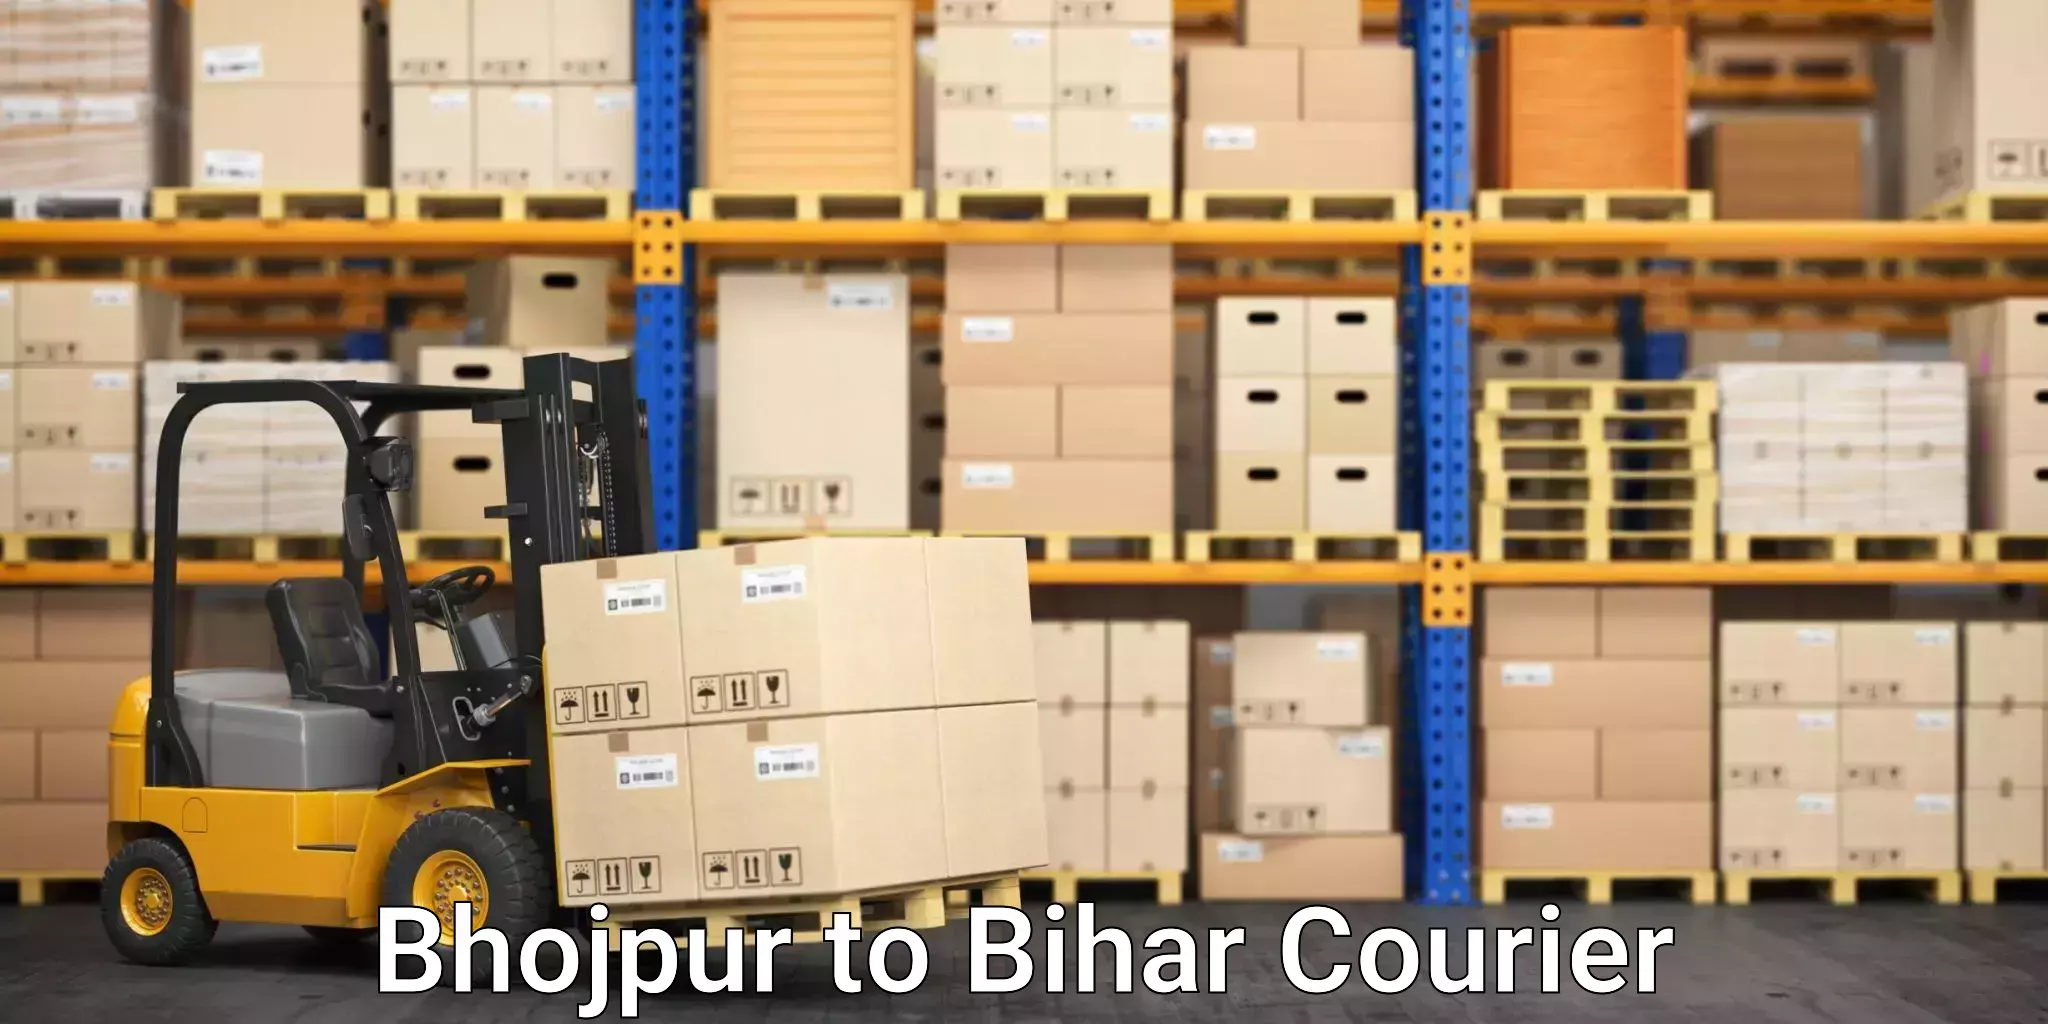 Furniture transport specialists Bhojpur to Bihar